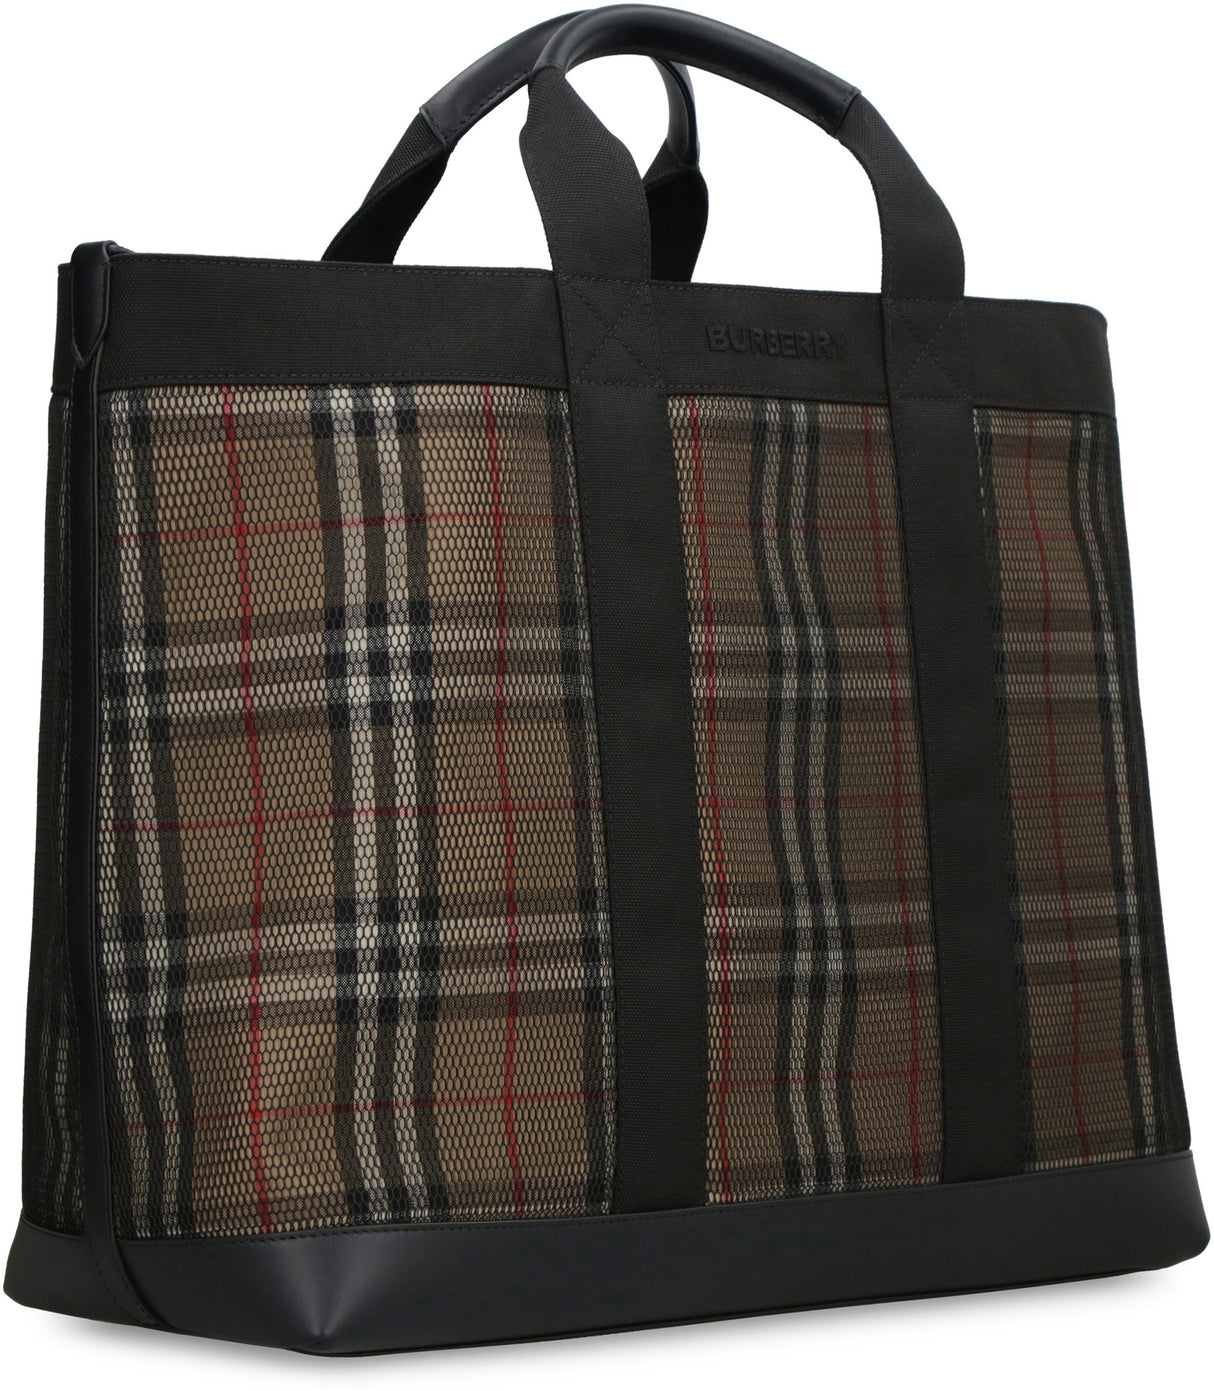 Black Mesh Tote Handbag - Vintage Check Print, Two Leather Handles, Logo Lining, SS23 Collection